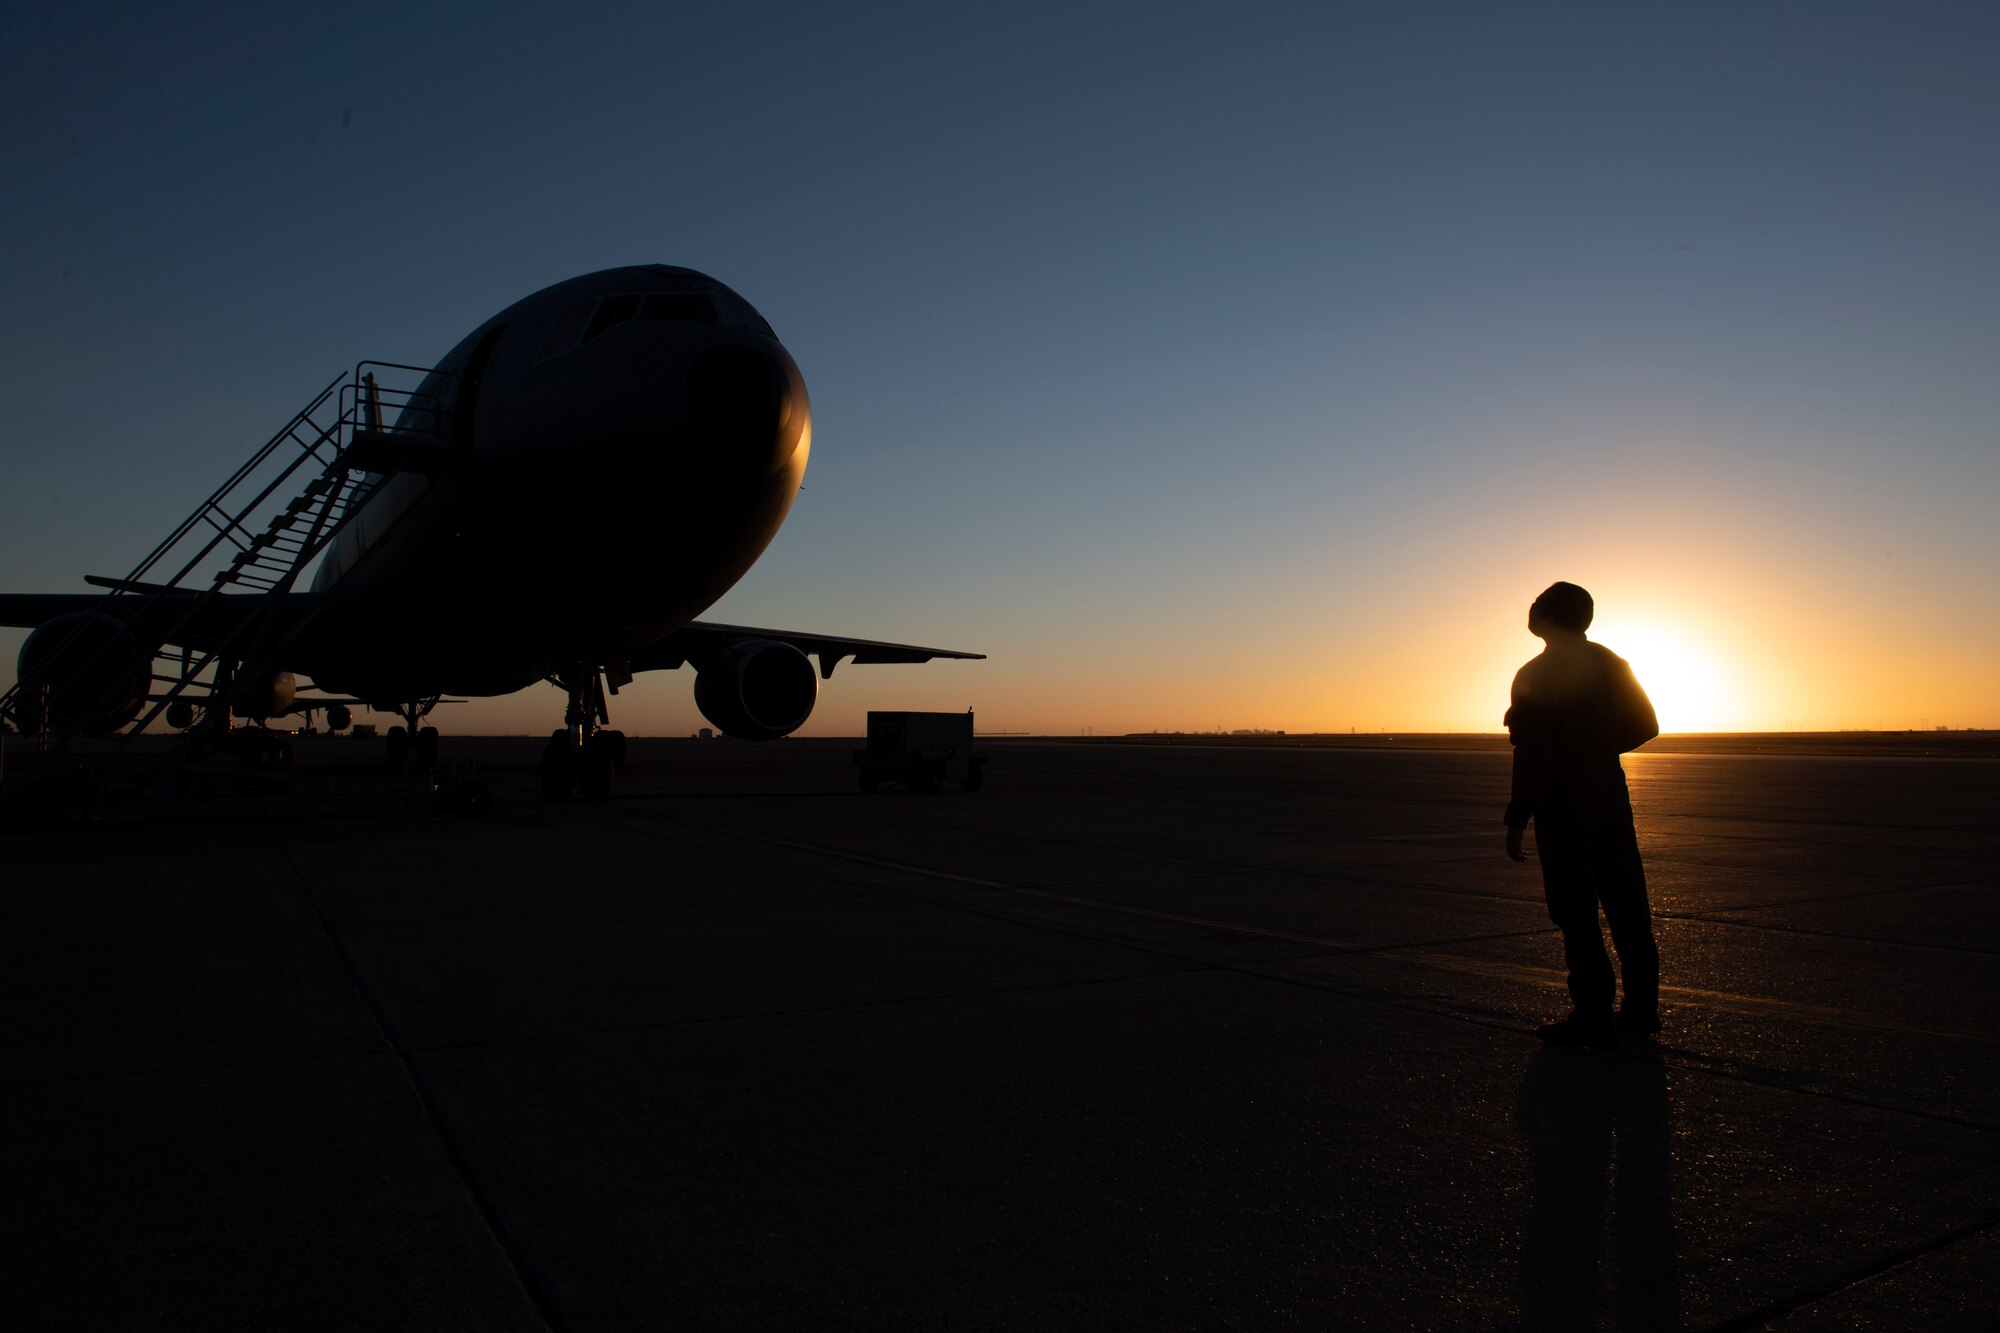 photos of KC-10 refueling training